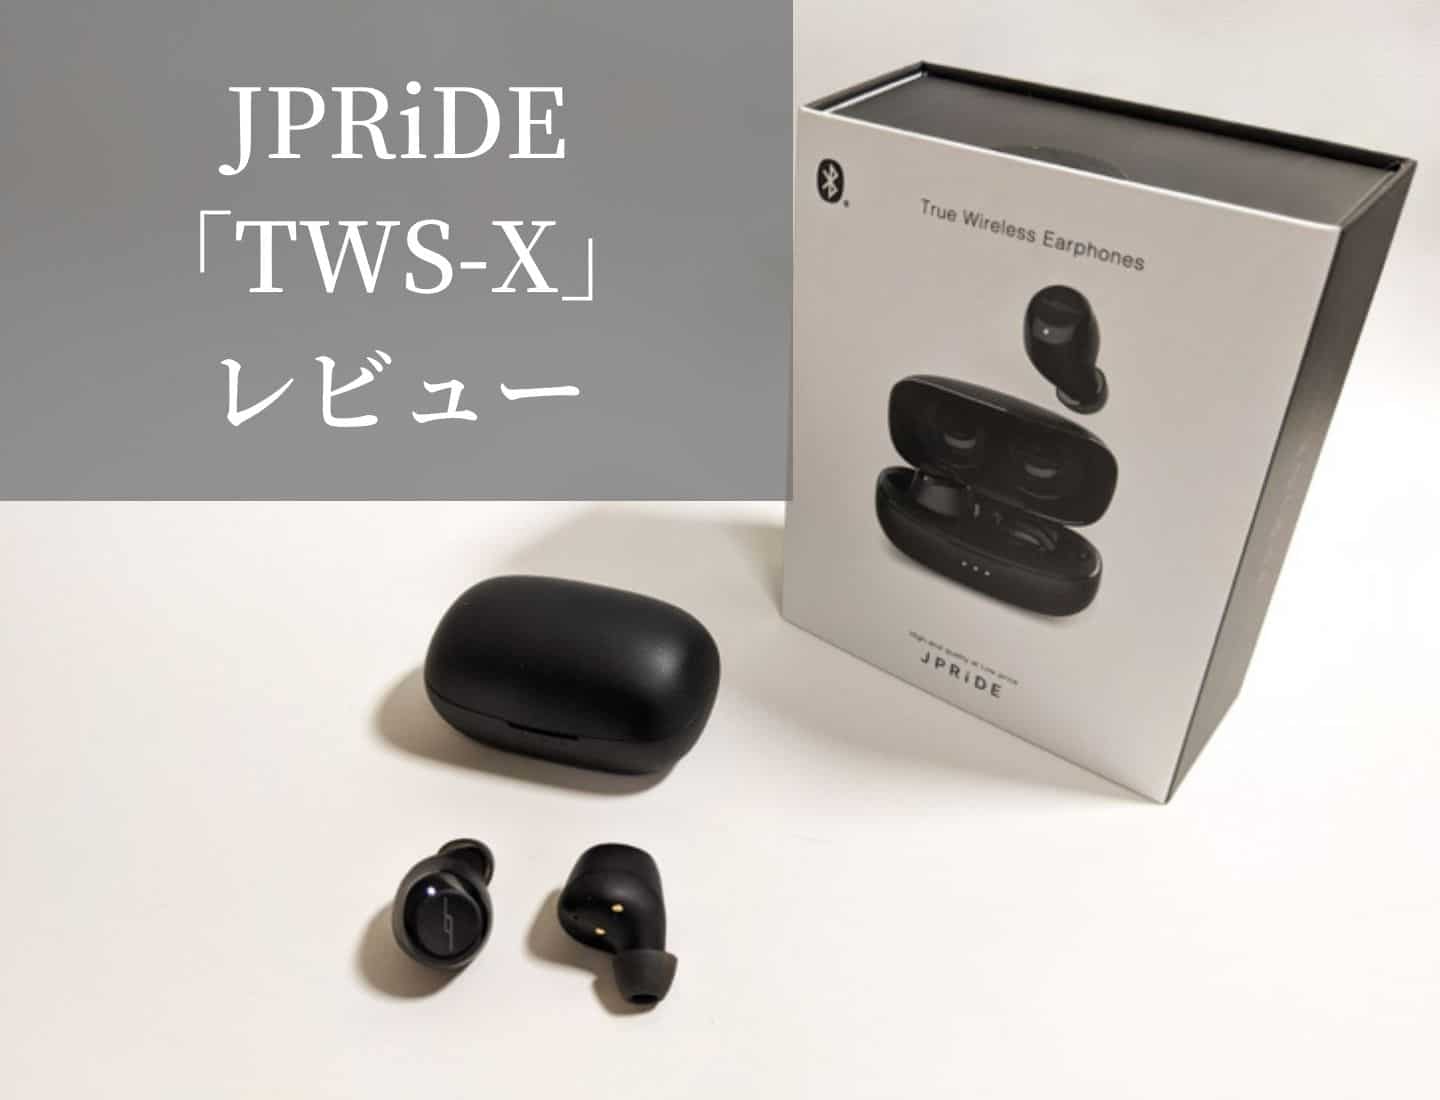 【JPRiDE TWS-X レビュー】5,000円台とは思えない音質とaptXコーデック対応の優等生